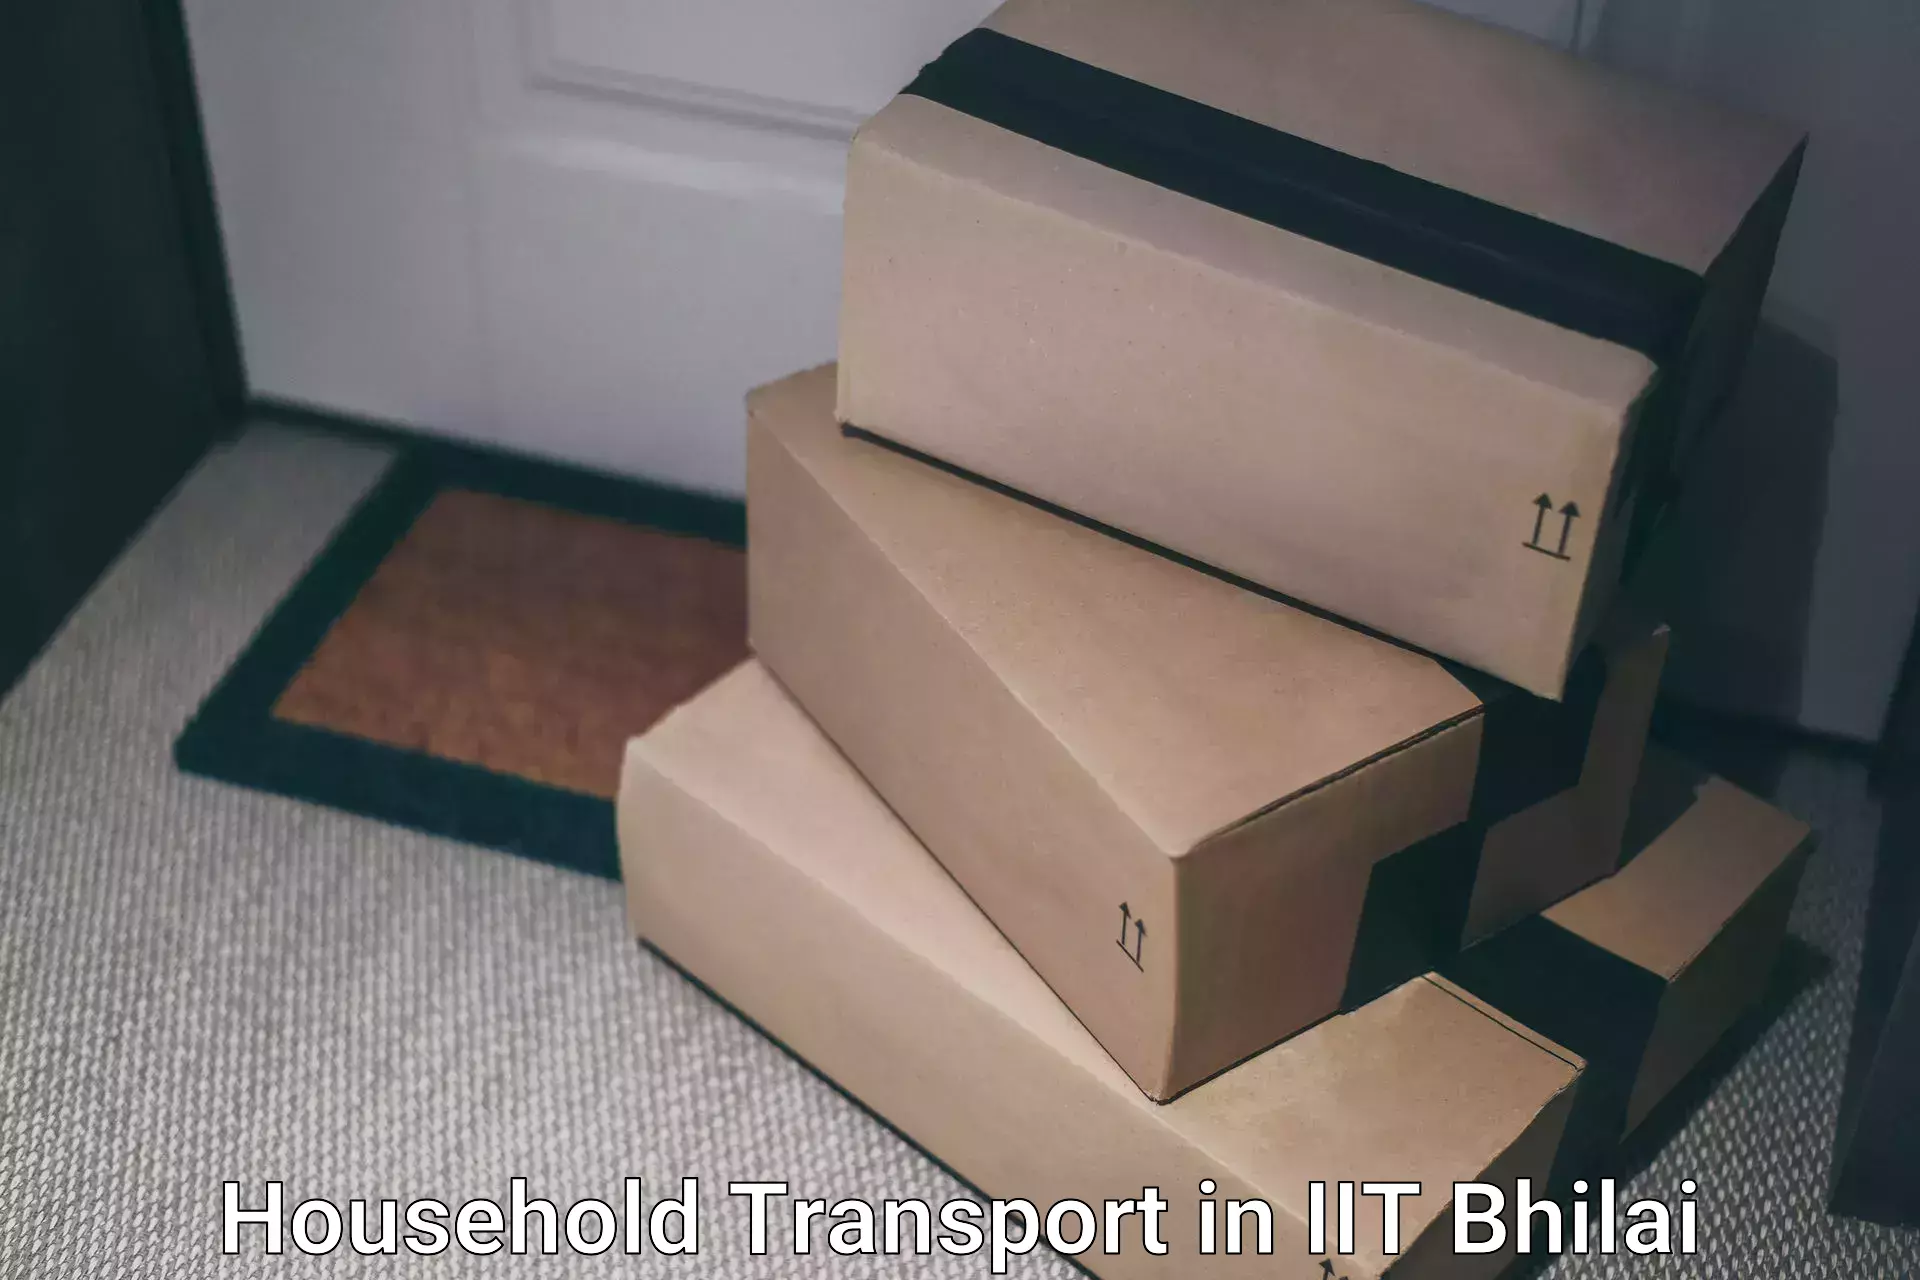 Trusted furniture transport in IIT Bhilai